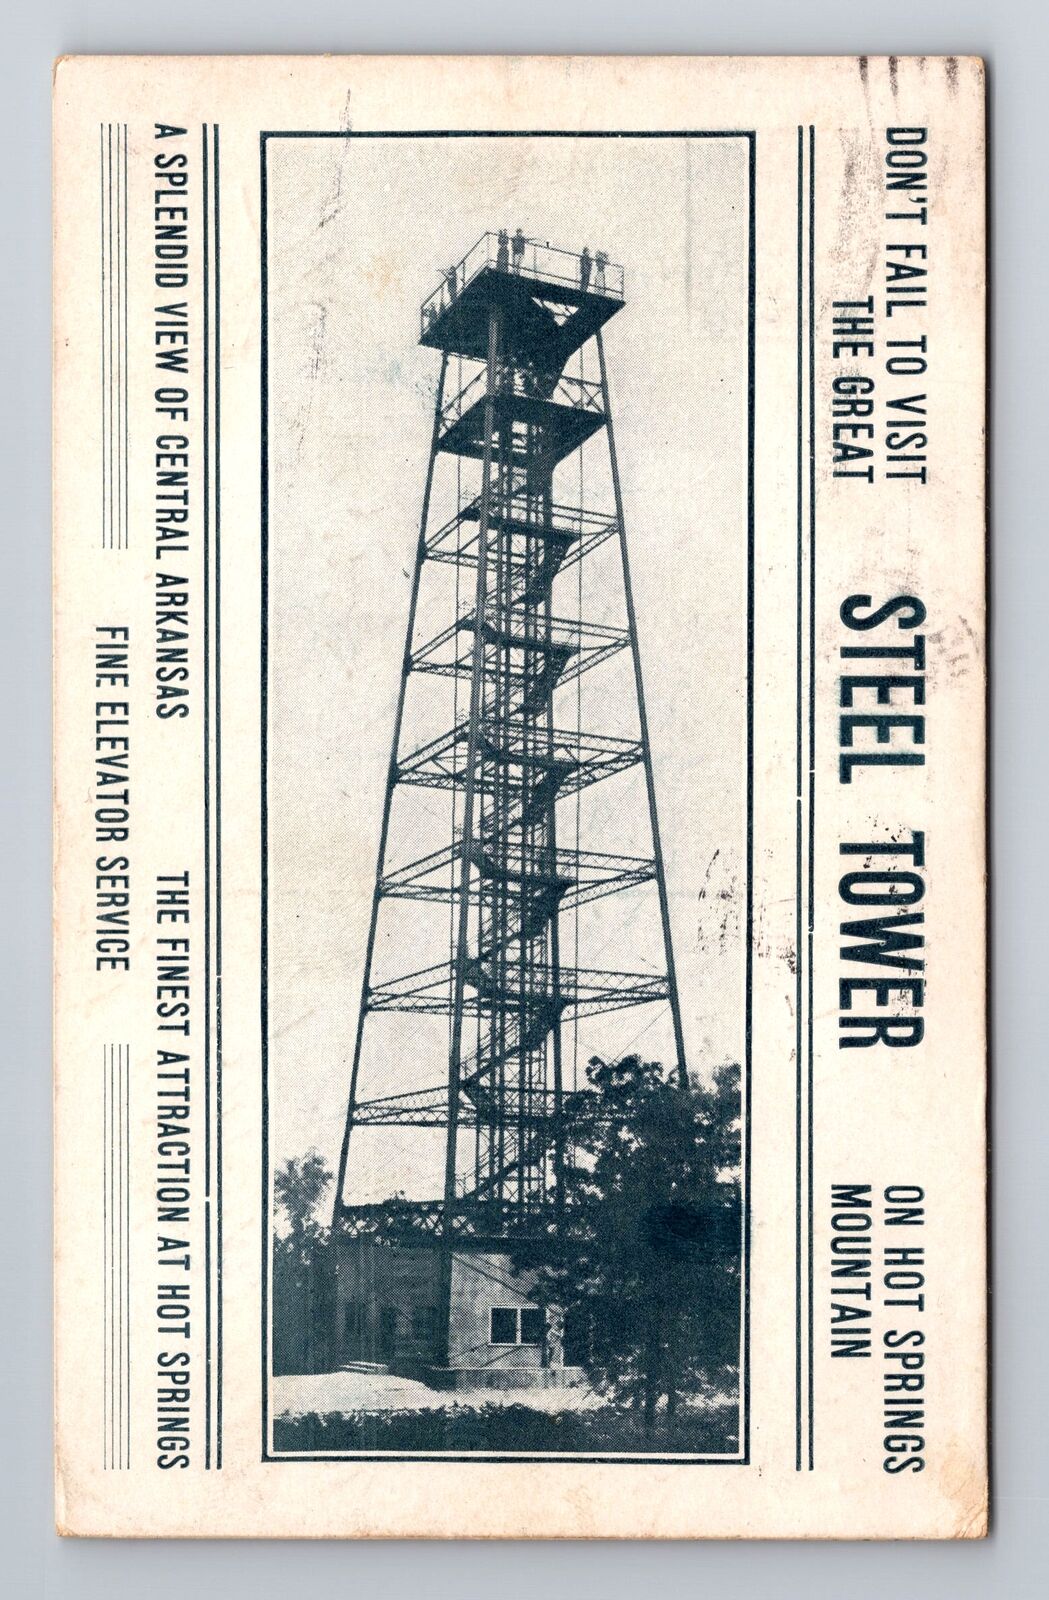 Hot Springs AR-Arkansas, Steel Tower, Antique, Vintage Souvenir Postcard